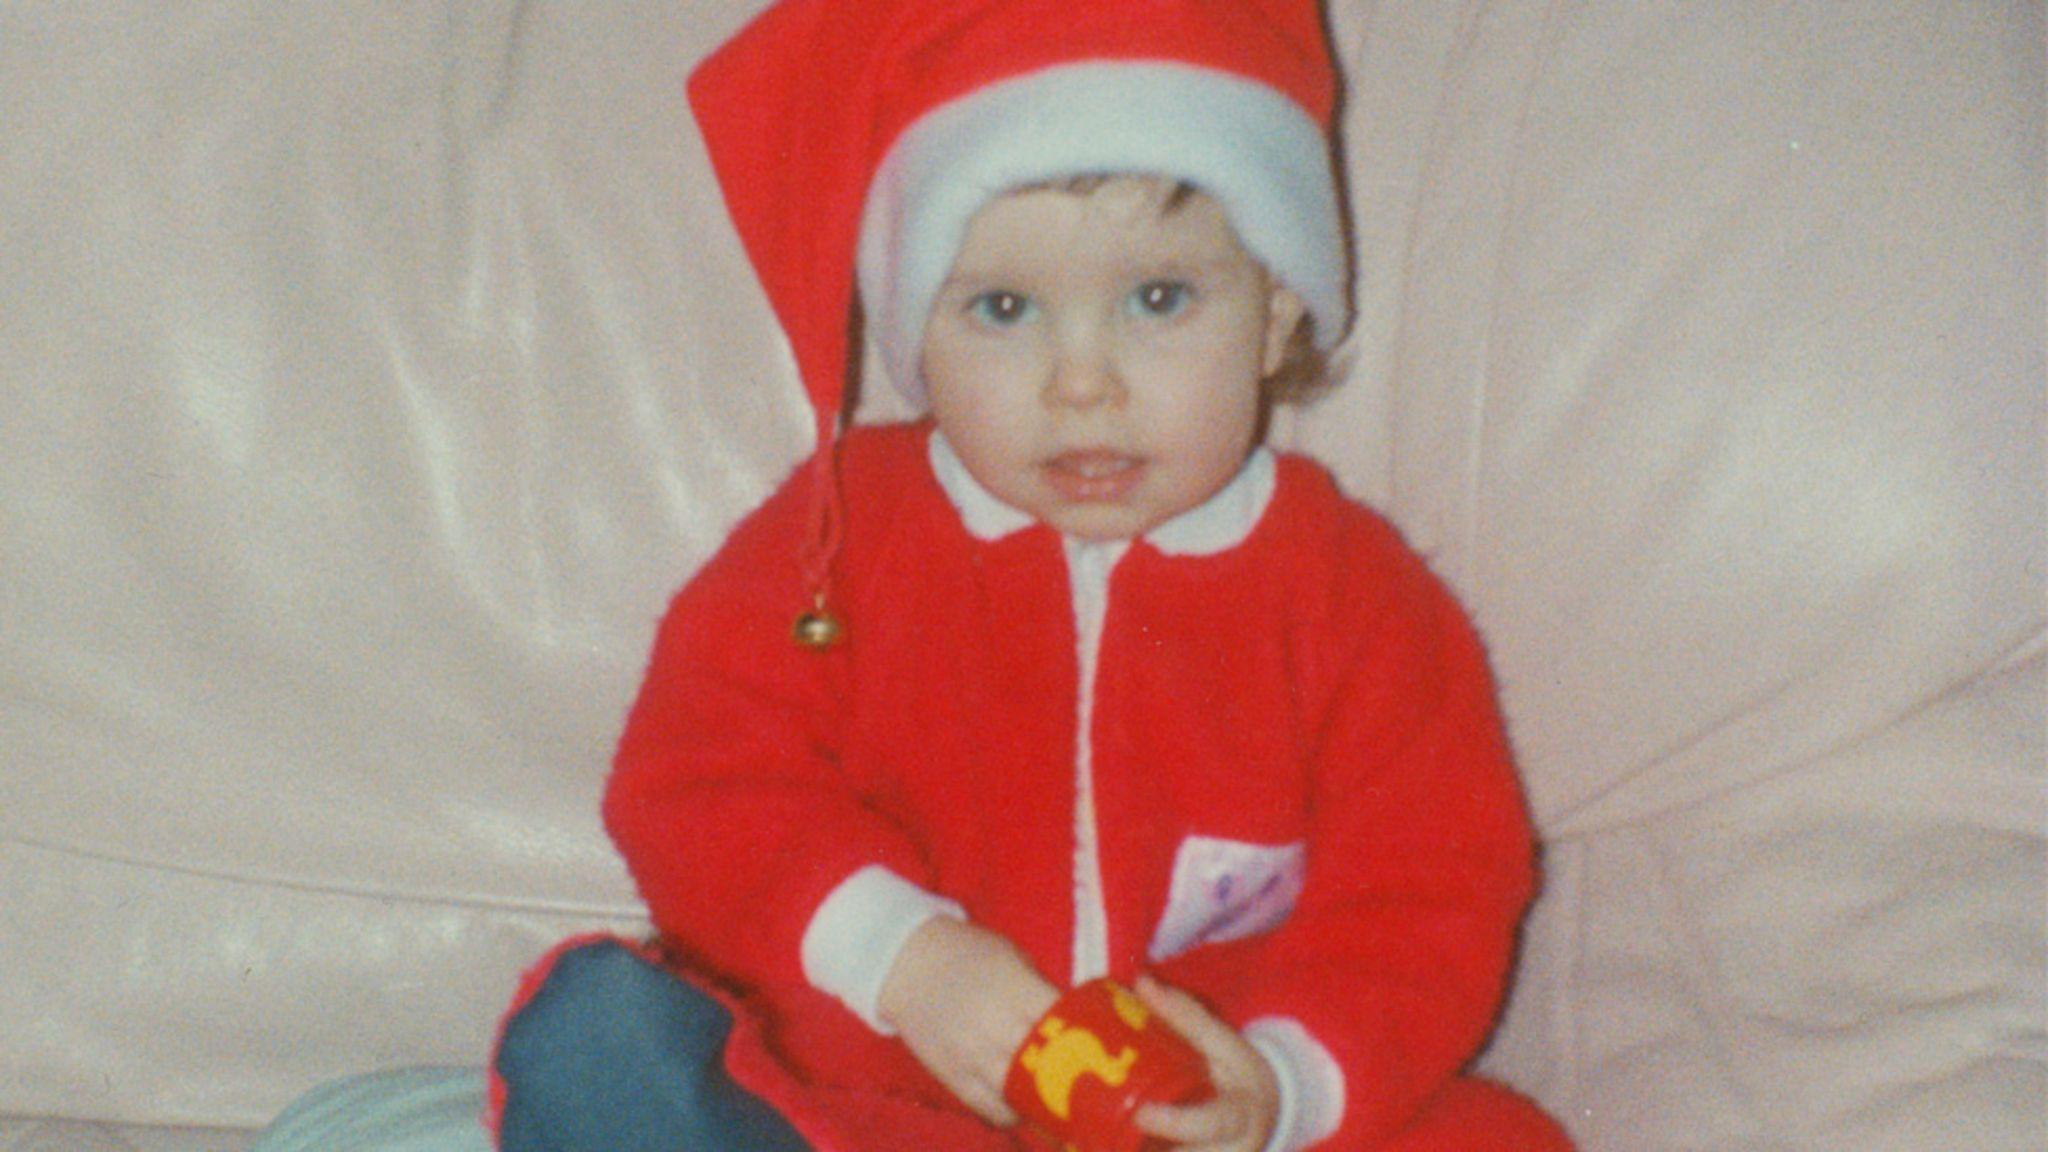 Sam Rushby de niño vestido de Papá Noel.